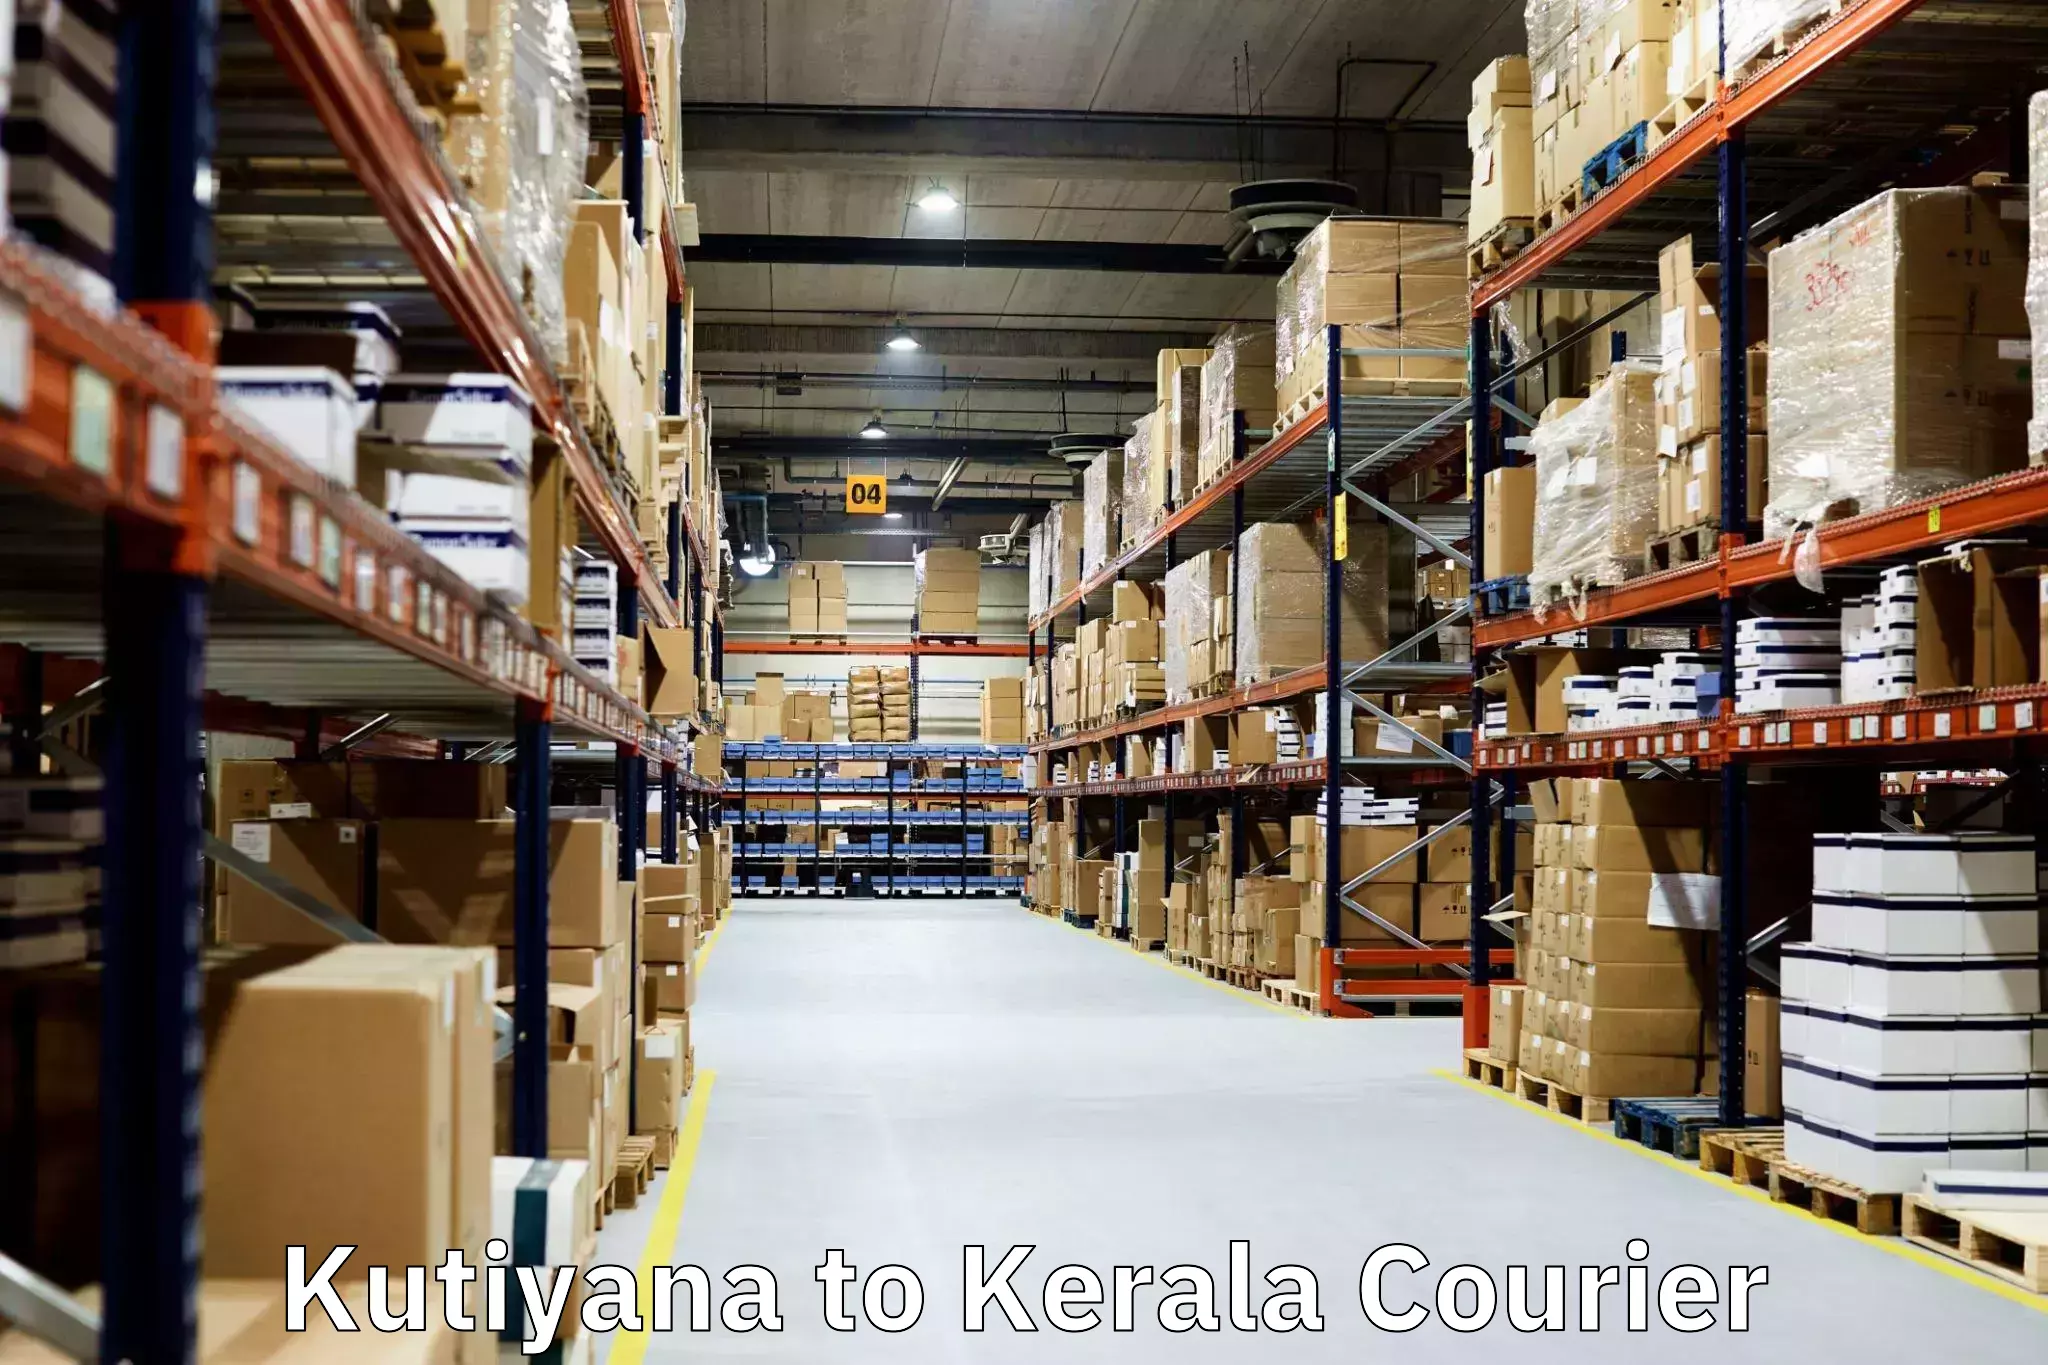 Efficient moving company Kutiyana to Cochin Port Kochi